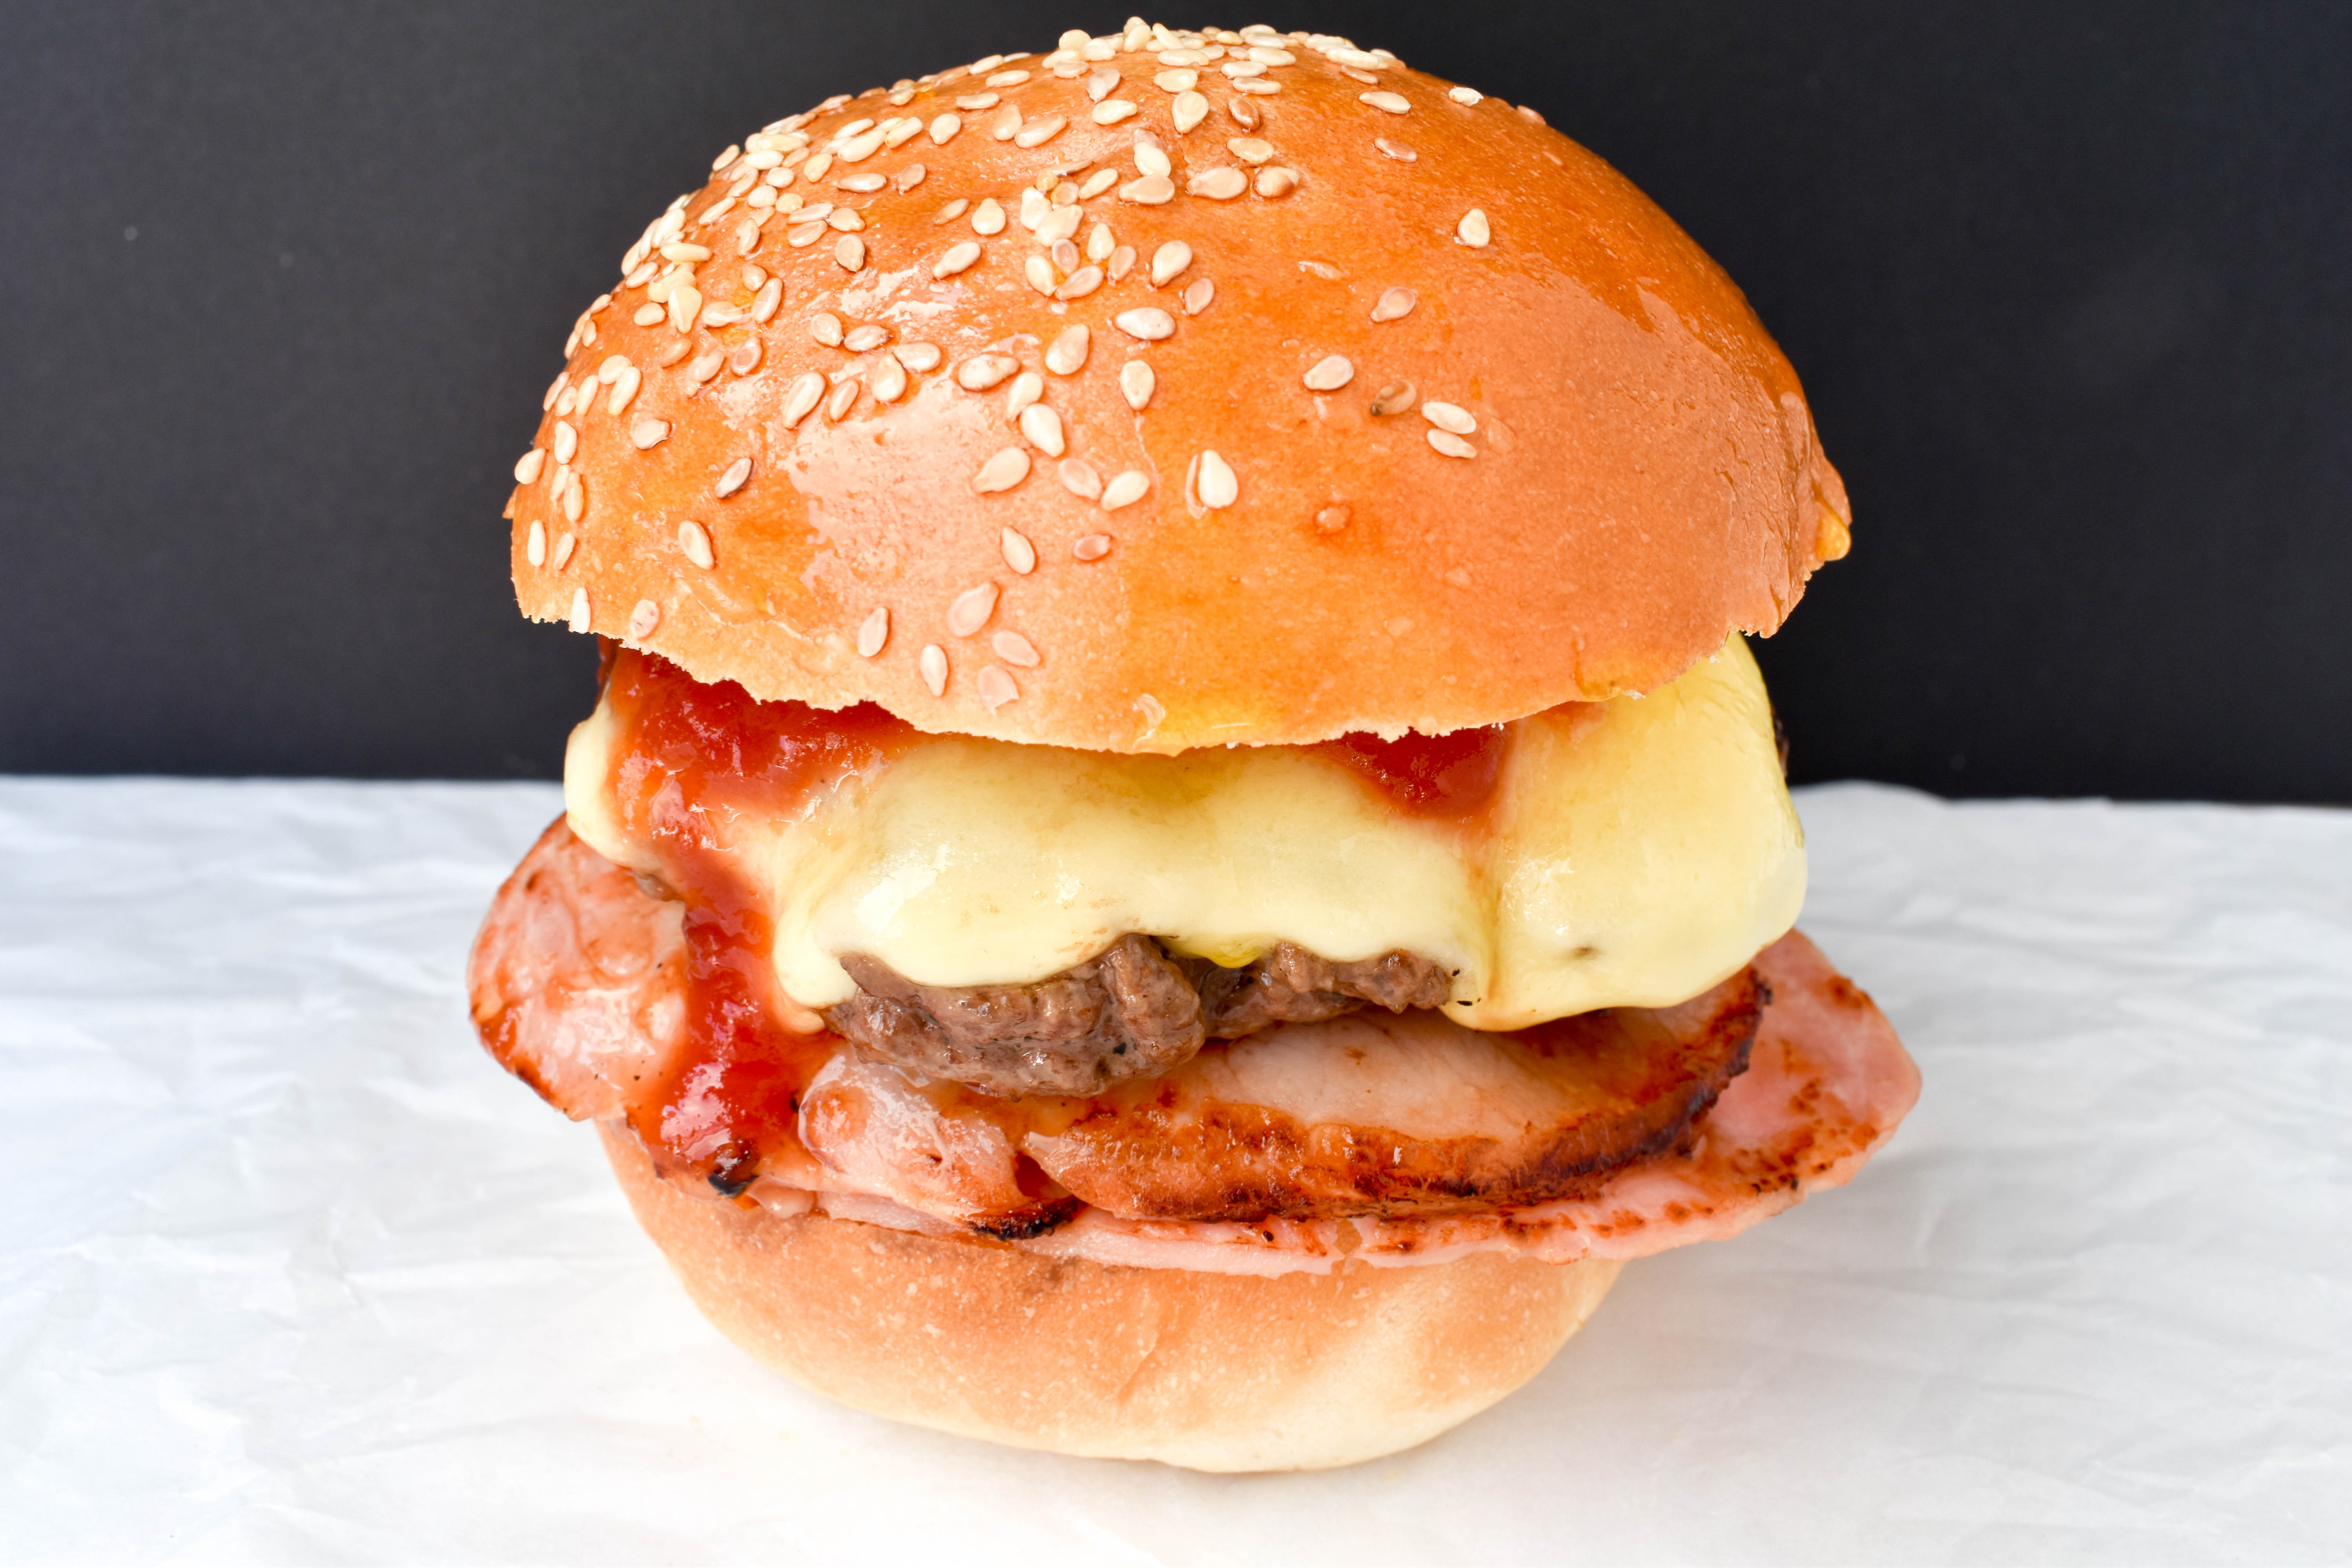 28 May Hamburger Day 2019 – How to make the best burger